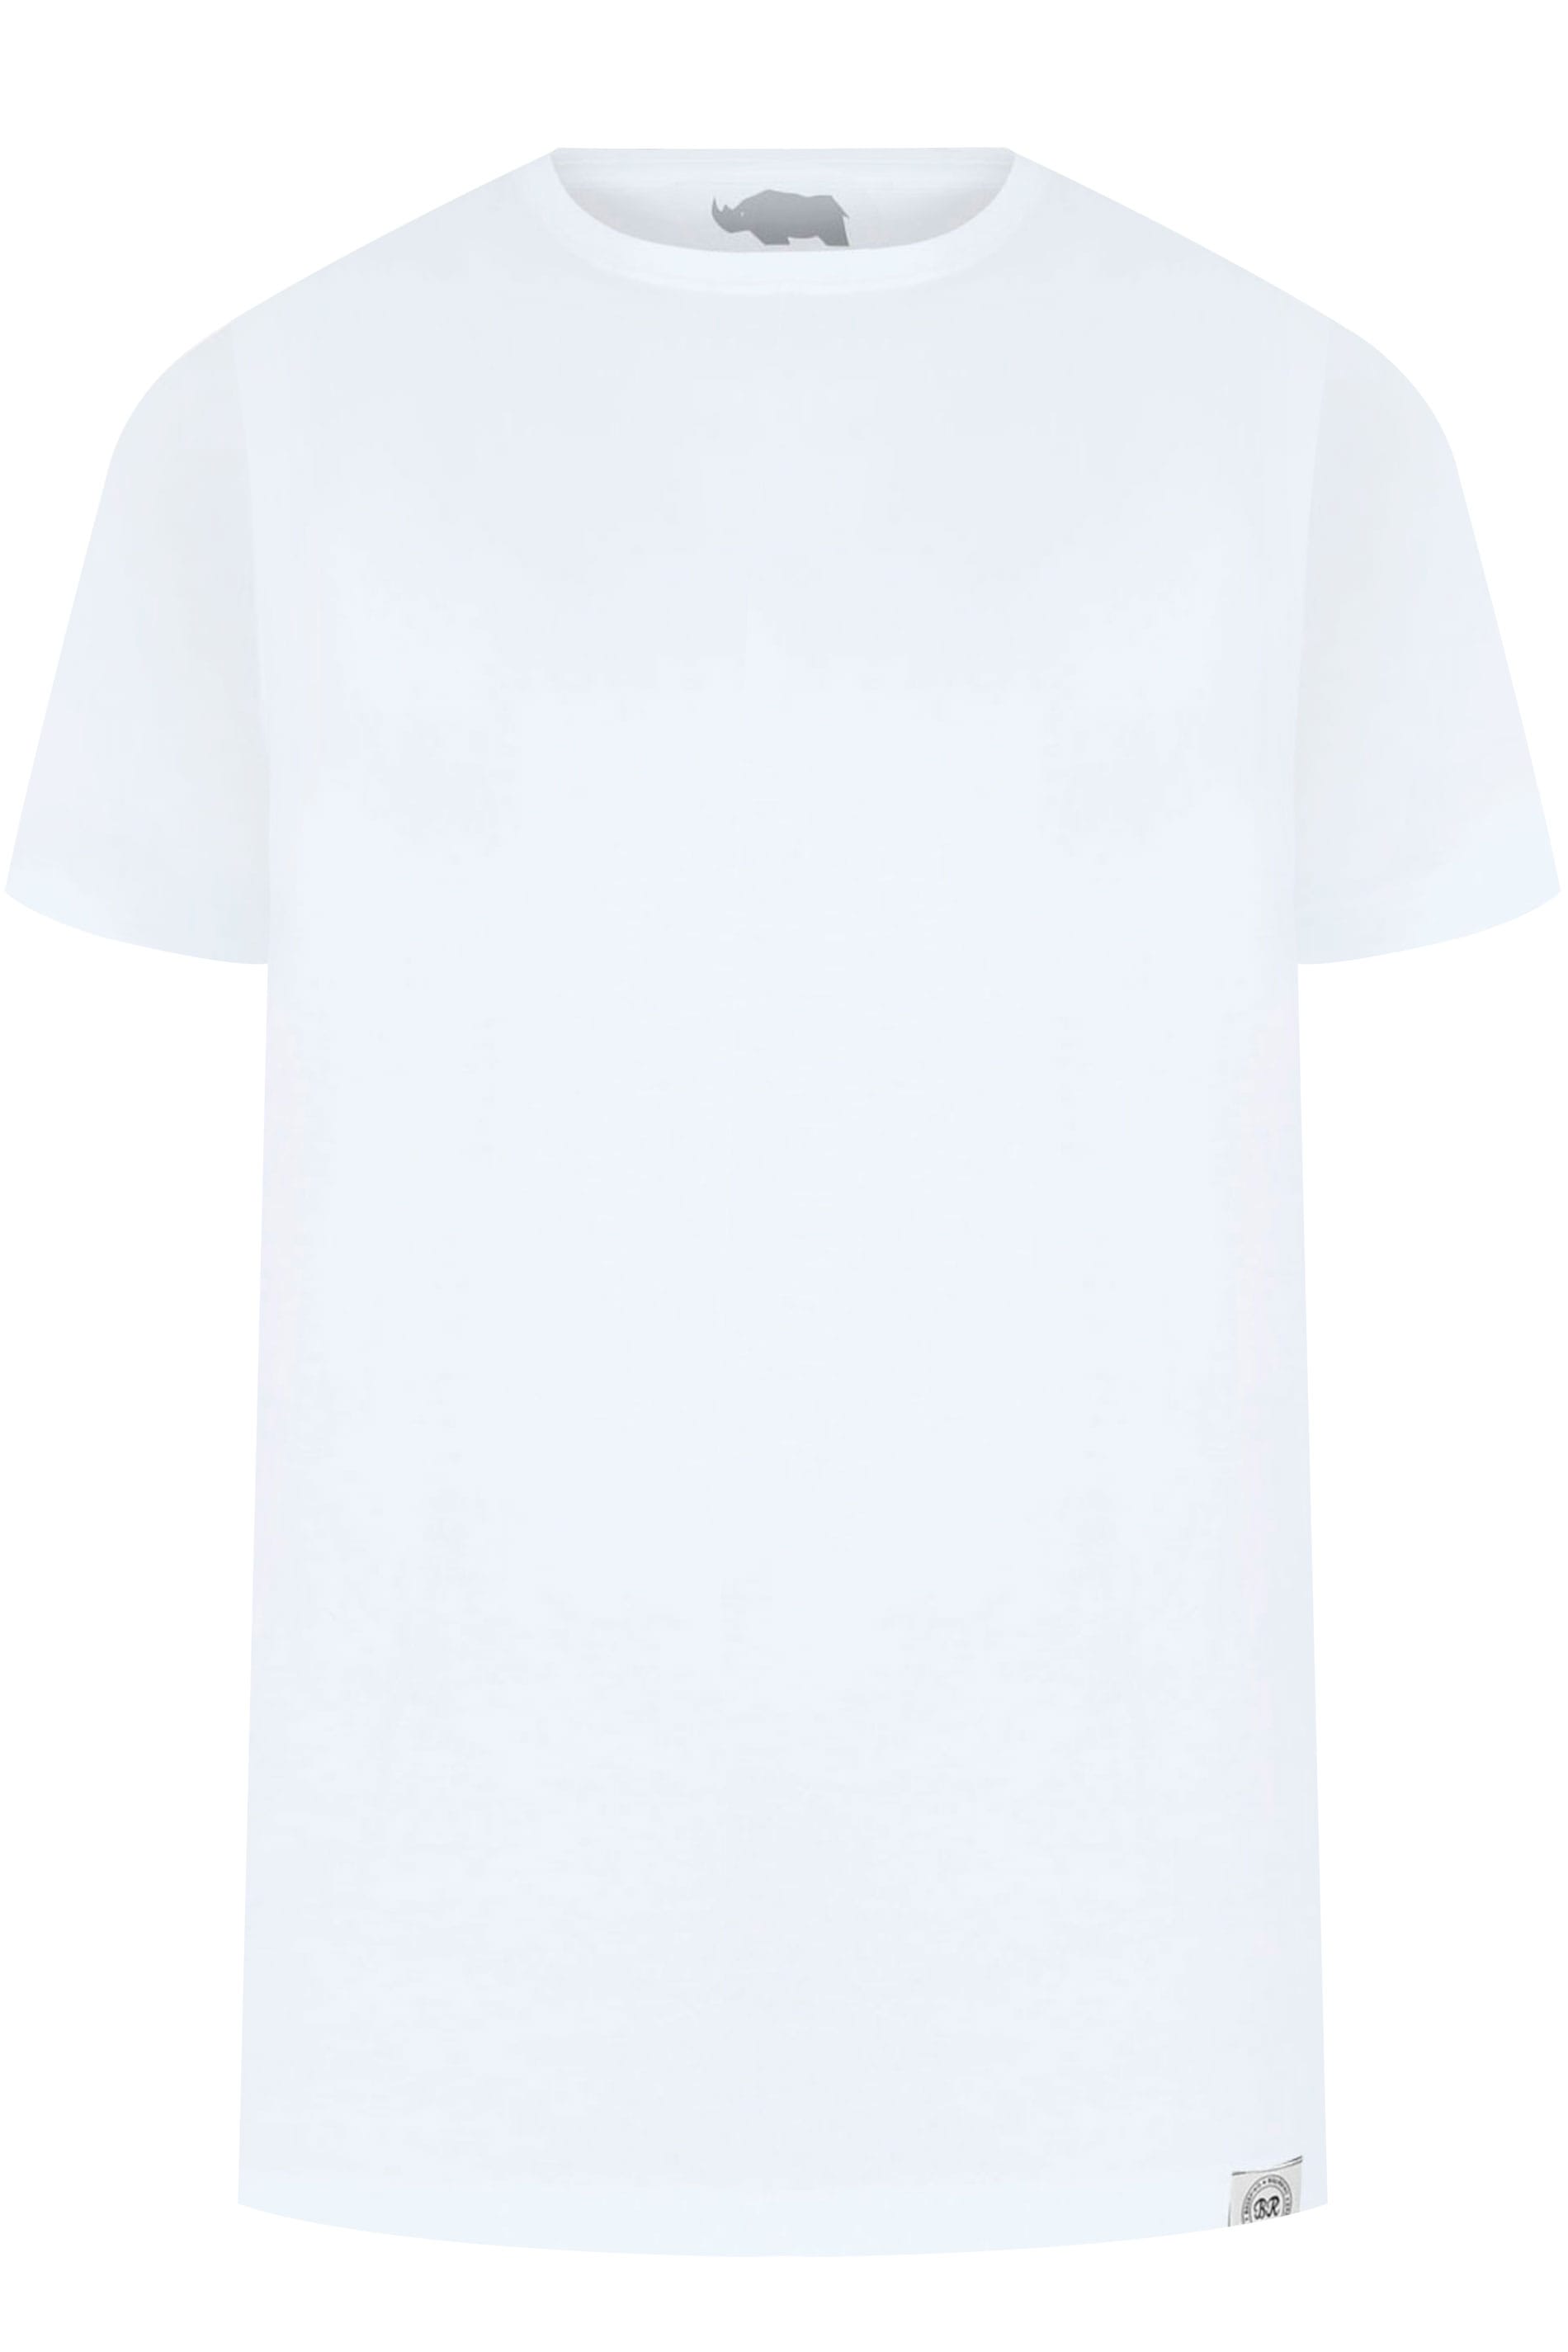 BadRhino White Crew Neck Basic T-Shirt, Sizes L to 8XL | BadRhino